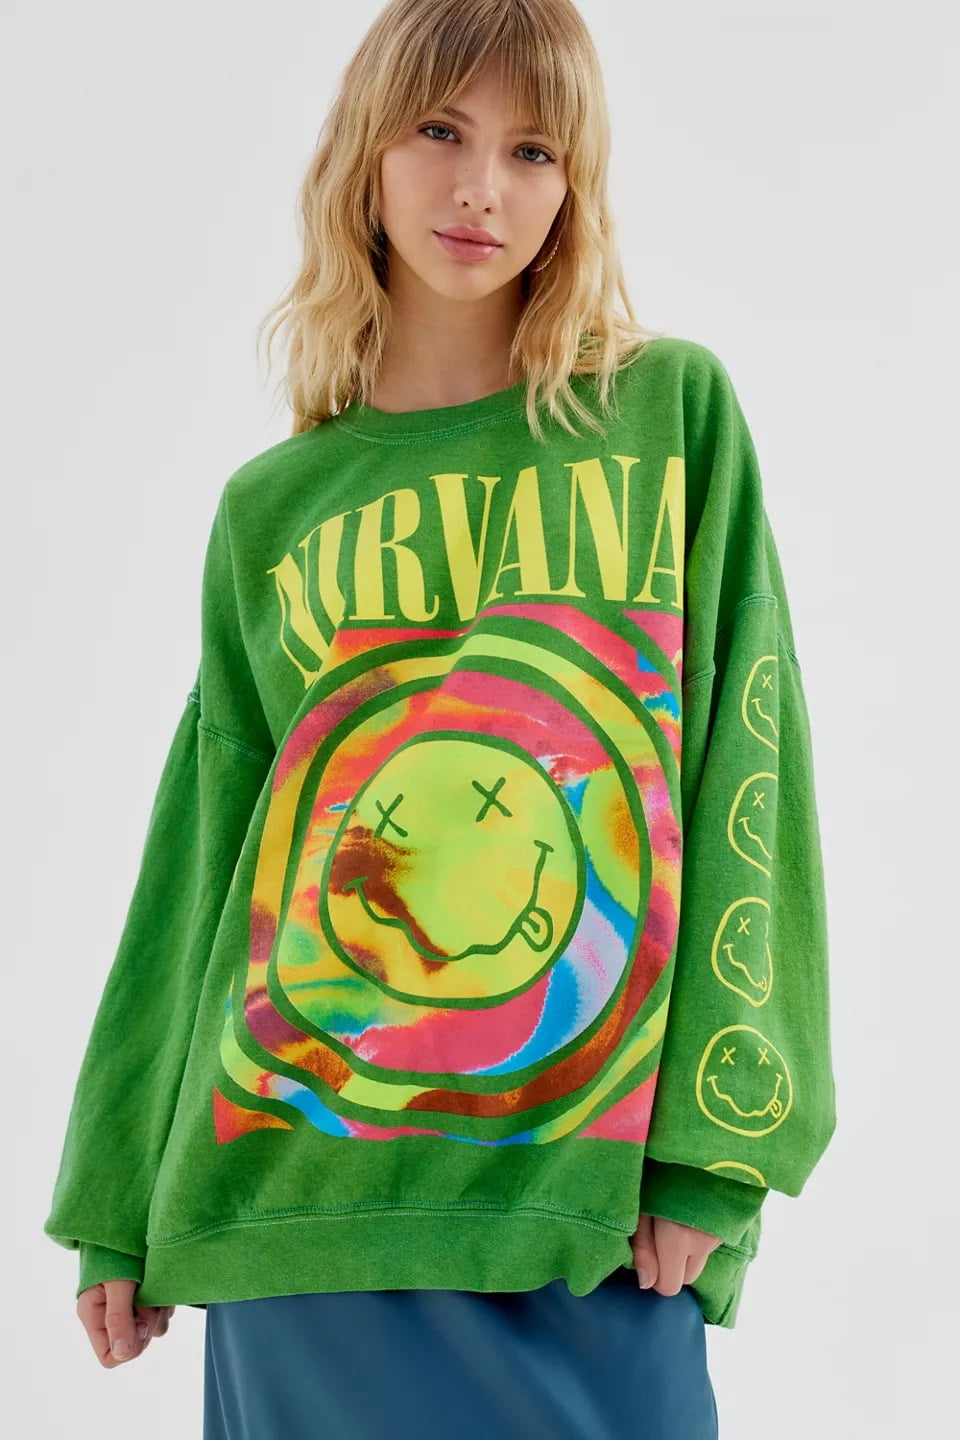 Urban Outfitters Women's X Nirvana Smiley Face Overdyed Crew Neck  Sweatshirt (Small/Medium, Green)